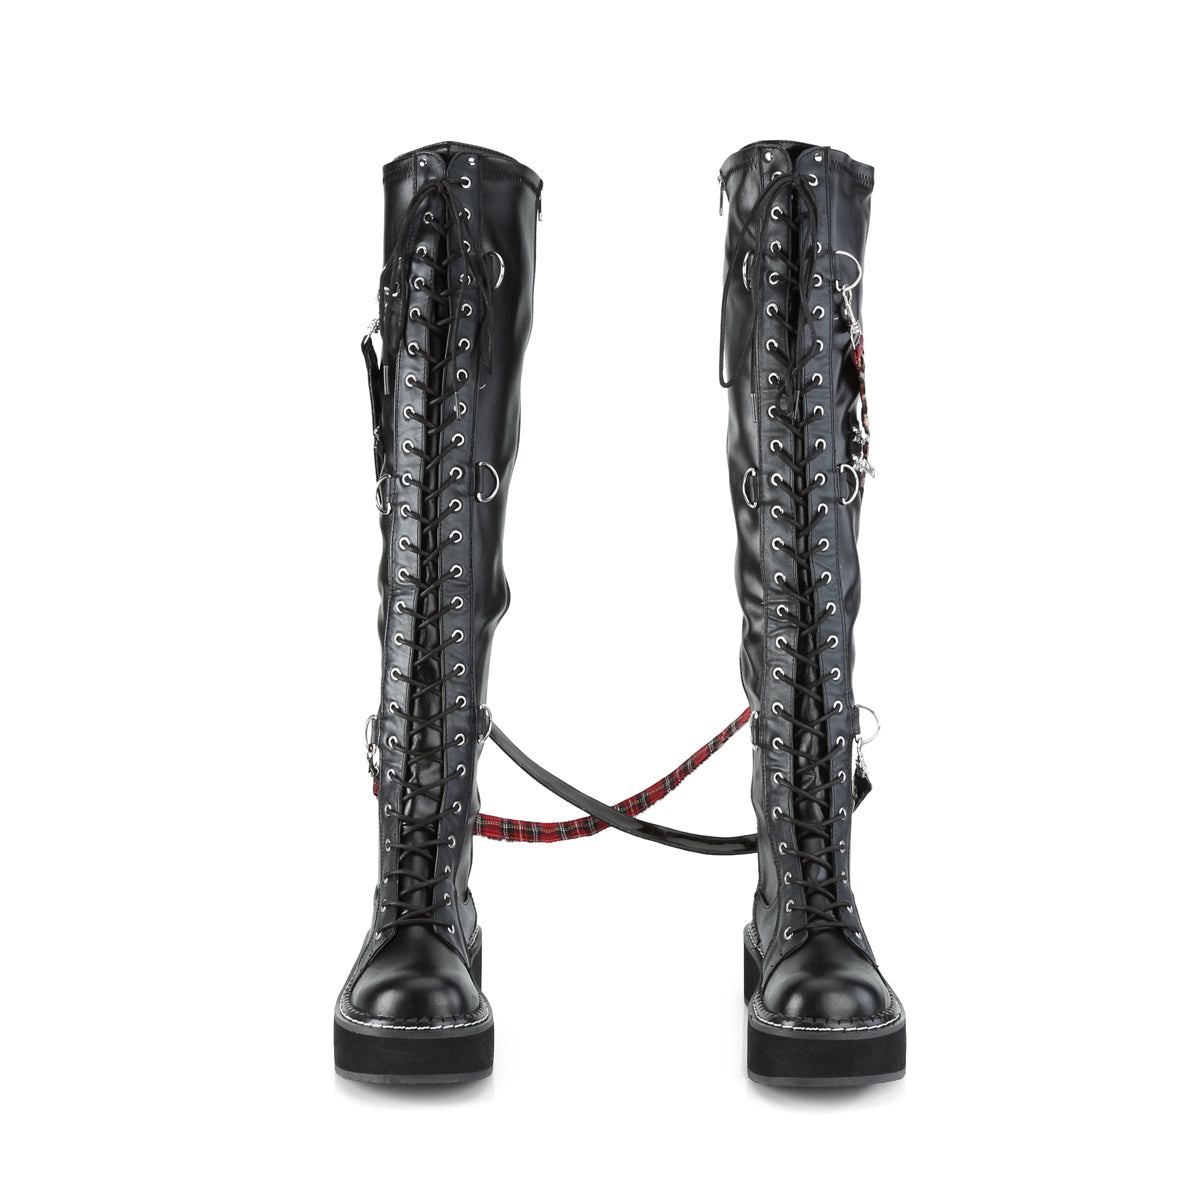 EMILY-377 Black StretchVegan Leather Lace-Up Boot Demonia